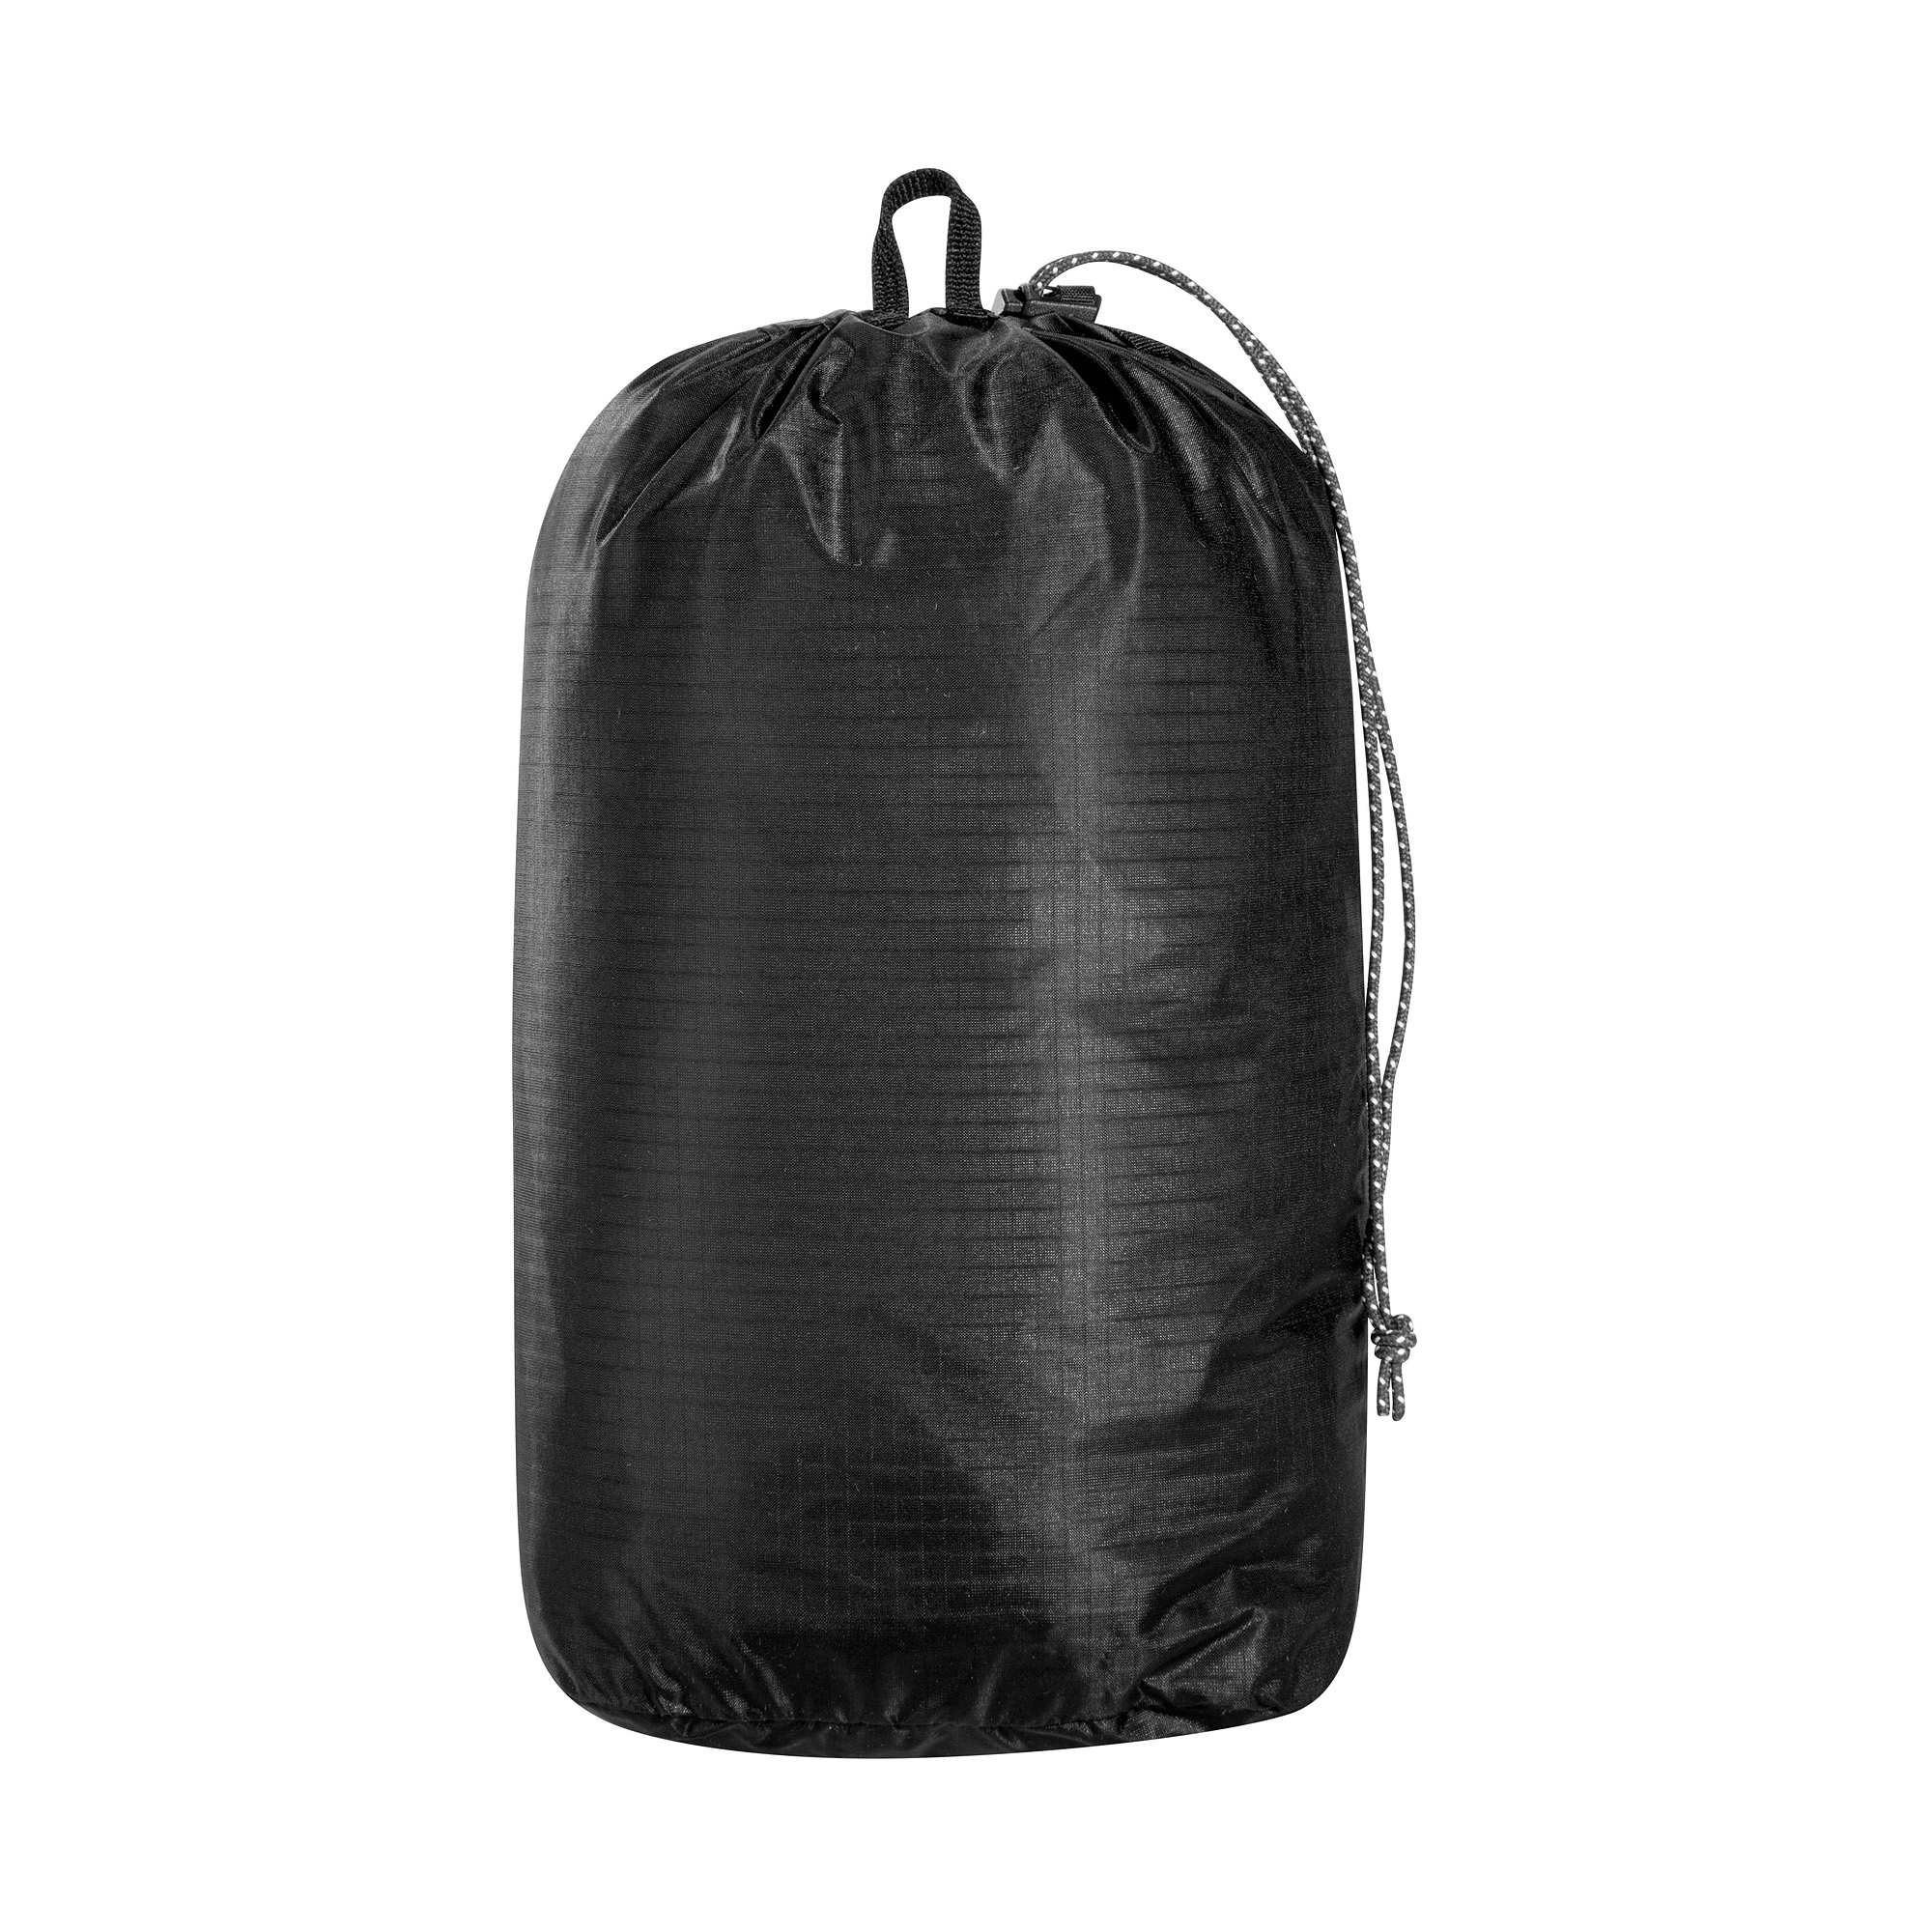 Tatonka SQZY Stuff Bag 2l black schwarz Packwürfel & Staubeutel 4013236393576